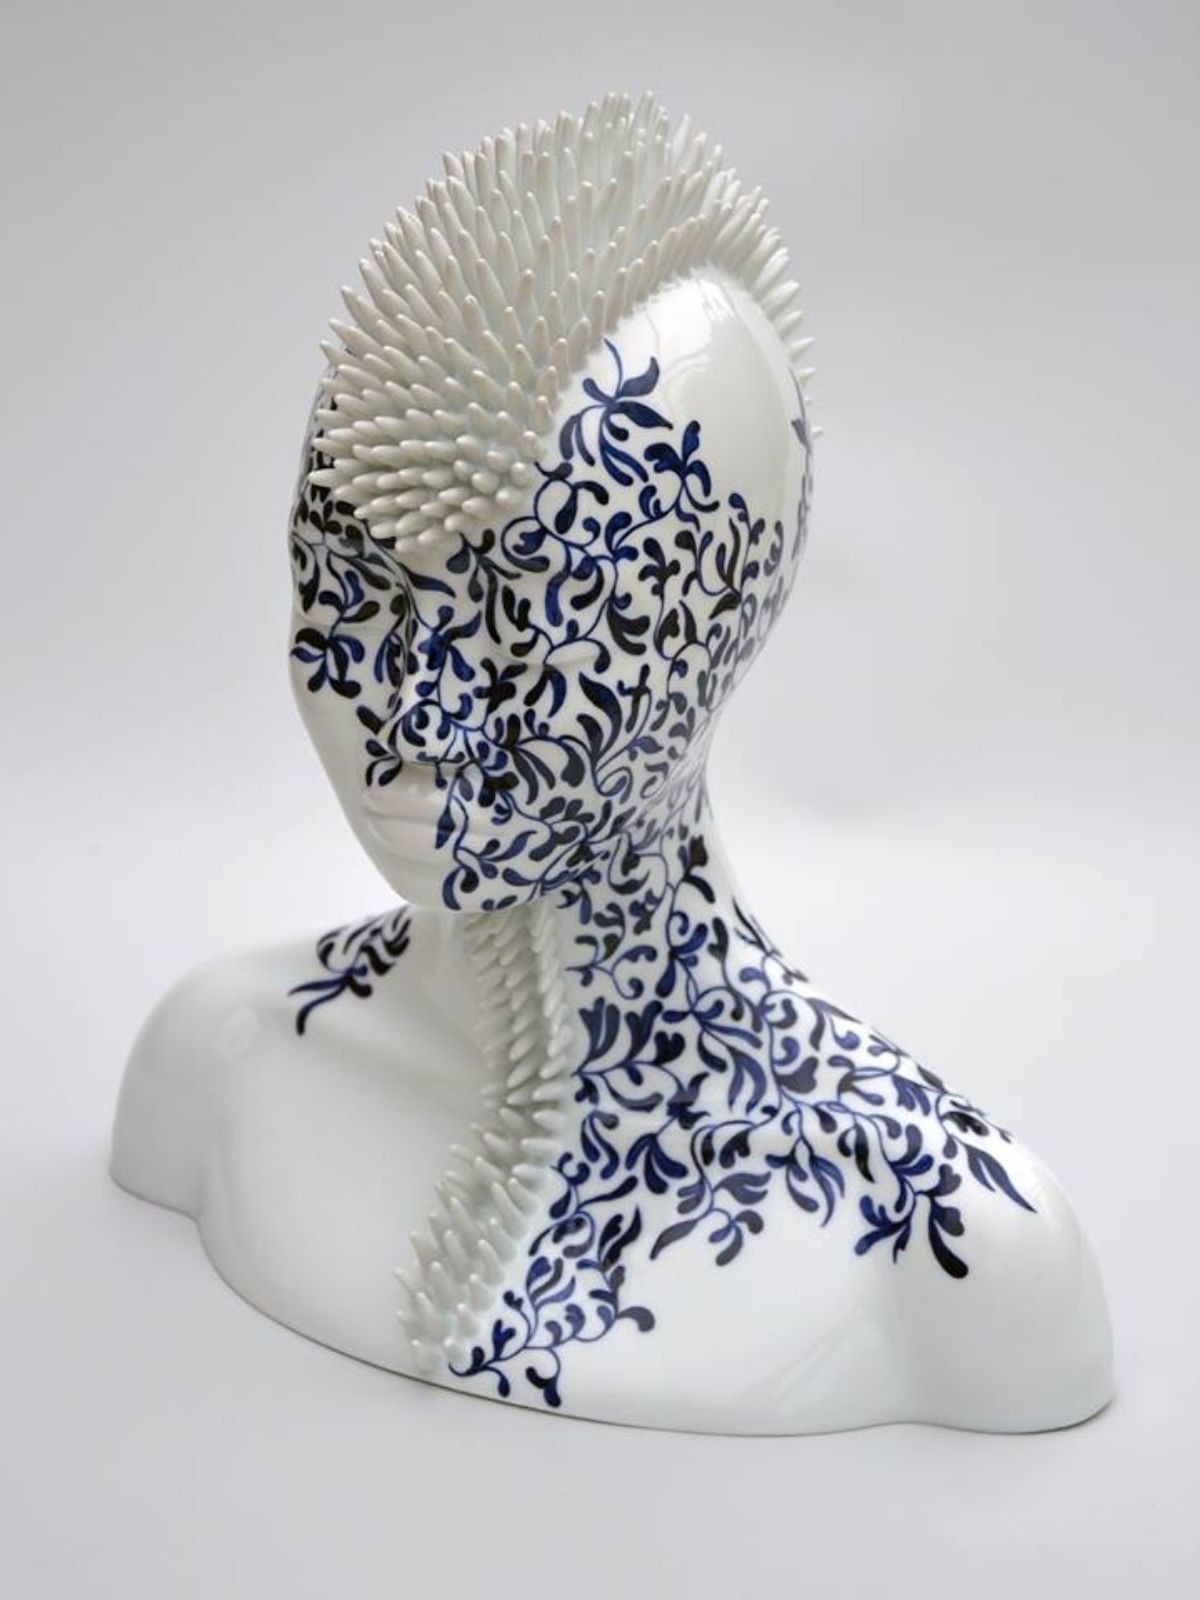 Contemporary Flower-Faced Sculptures That Shape the Future of Ceramics - gallery 1.2 - juliette clovis - on thursd